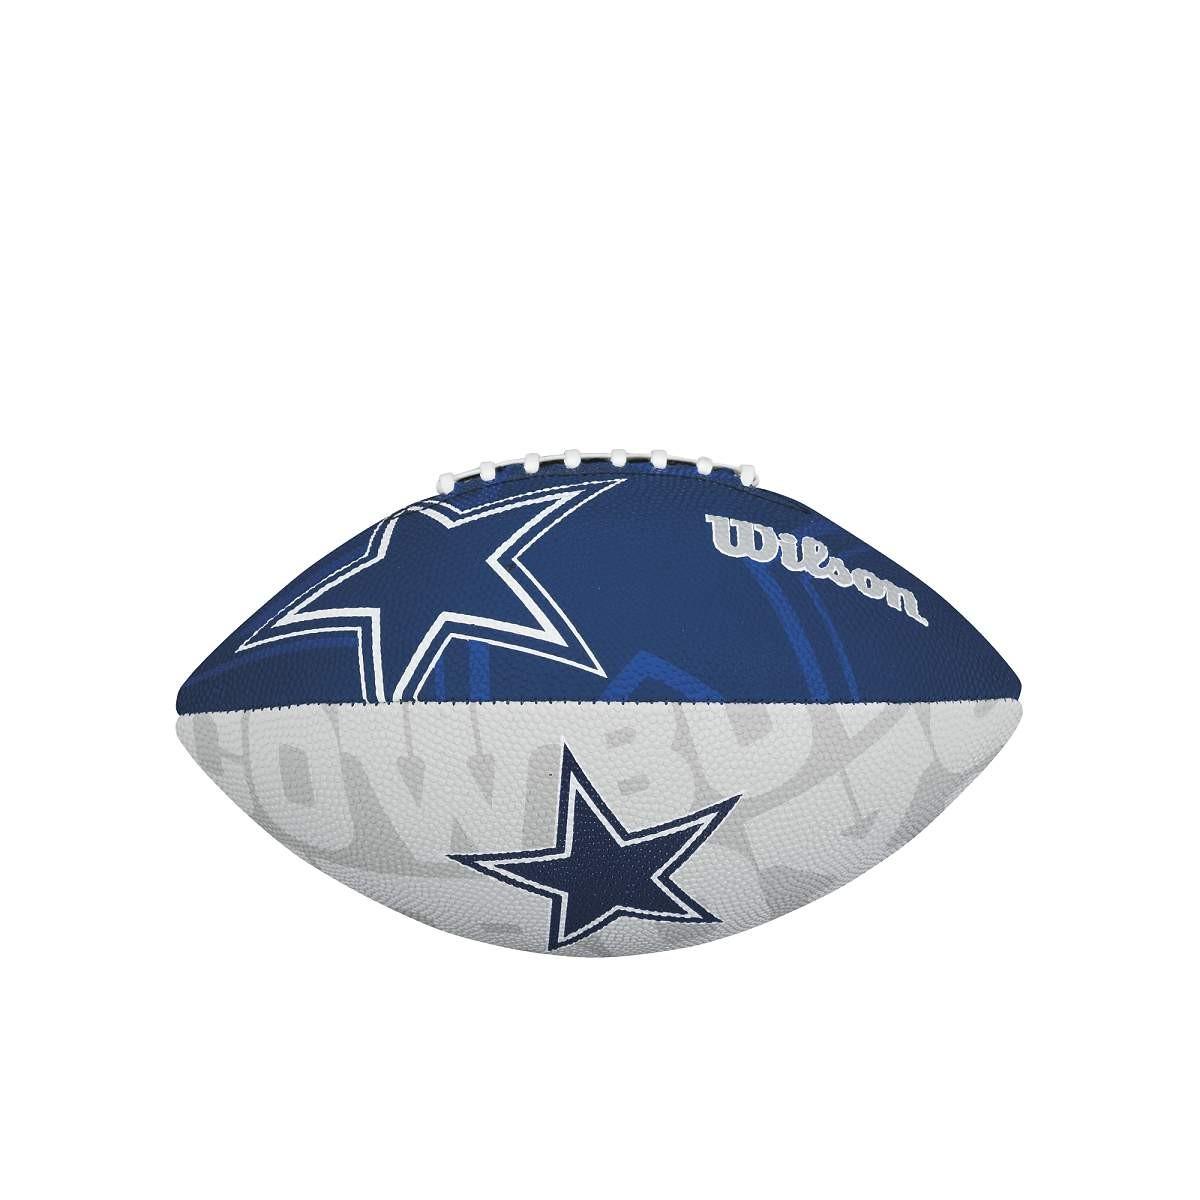 NFL Team Logo Junior Size American Football - Dallas Cowboys